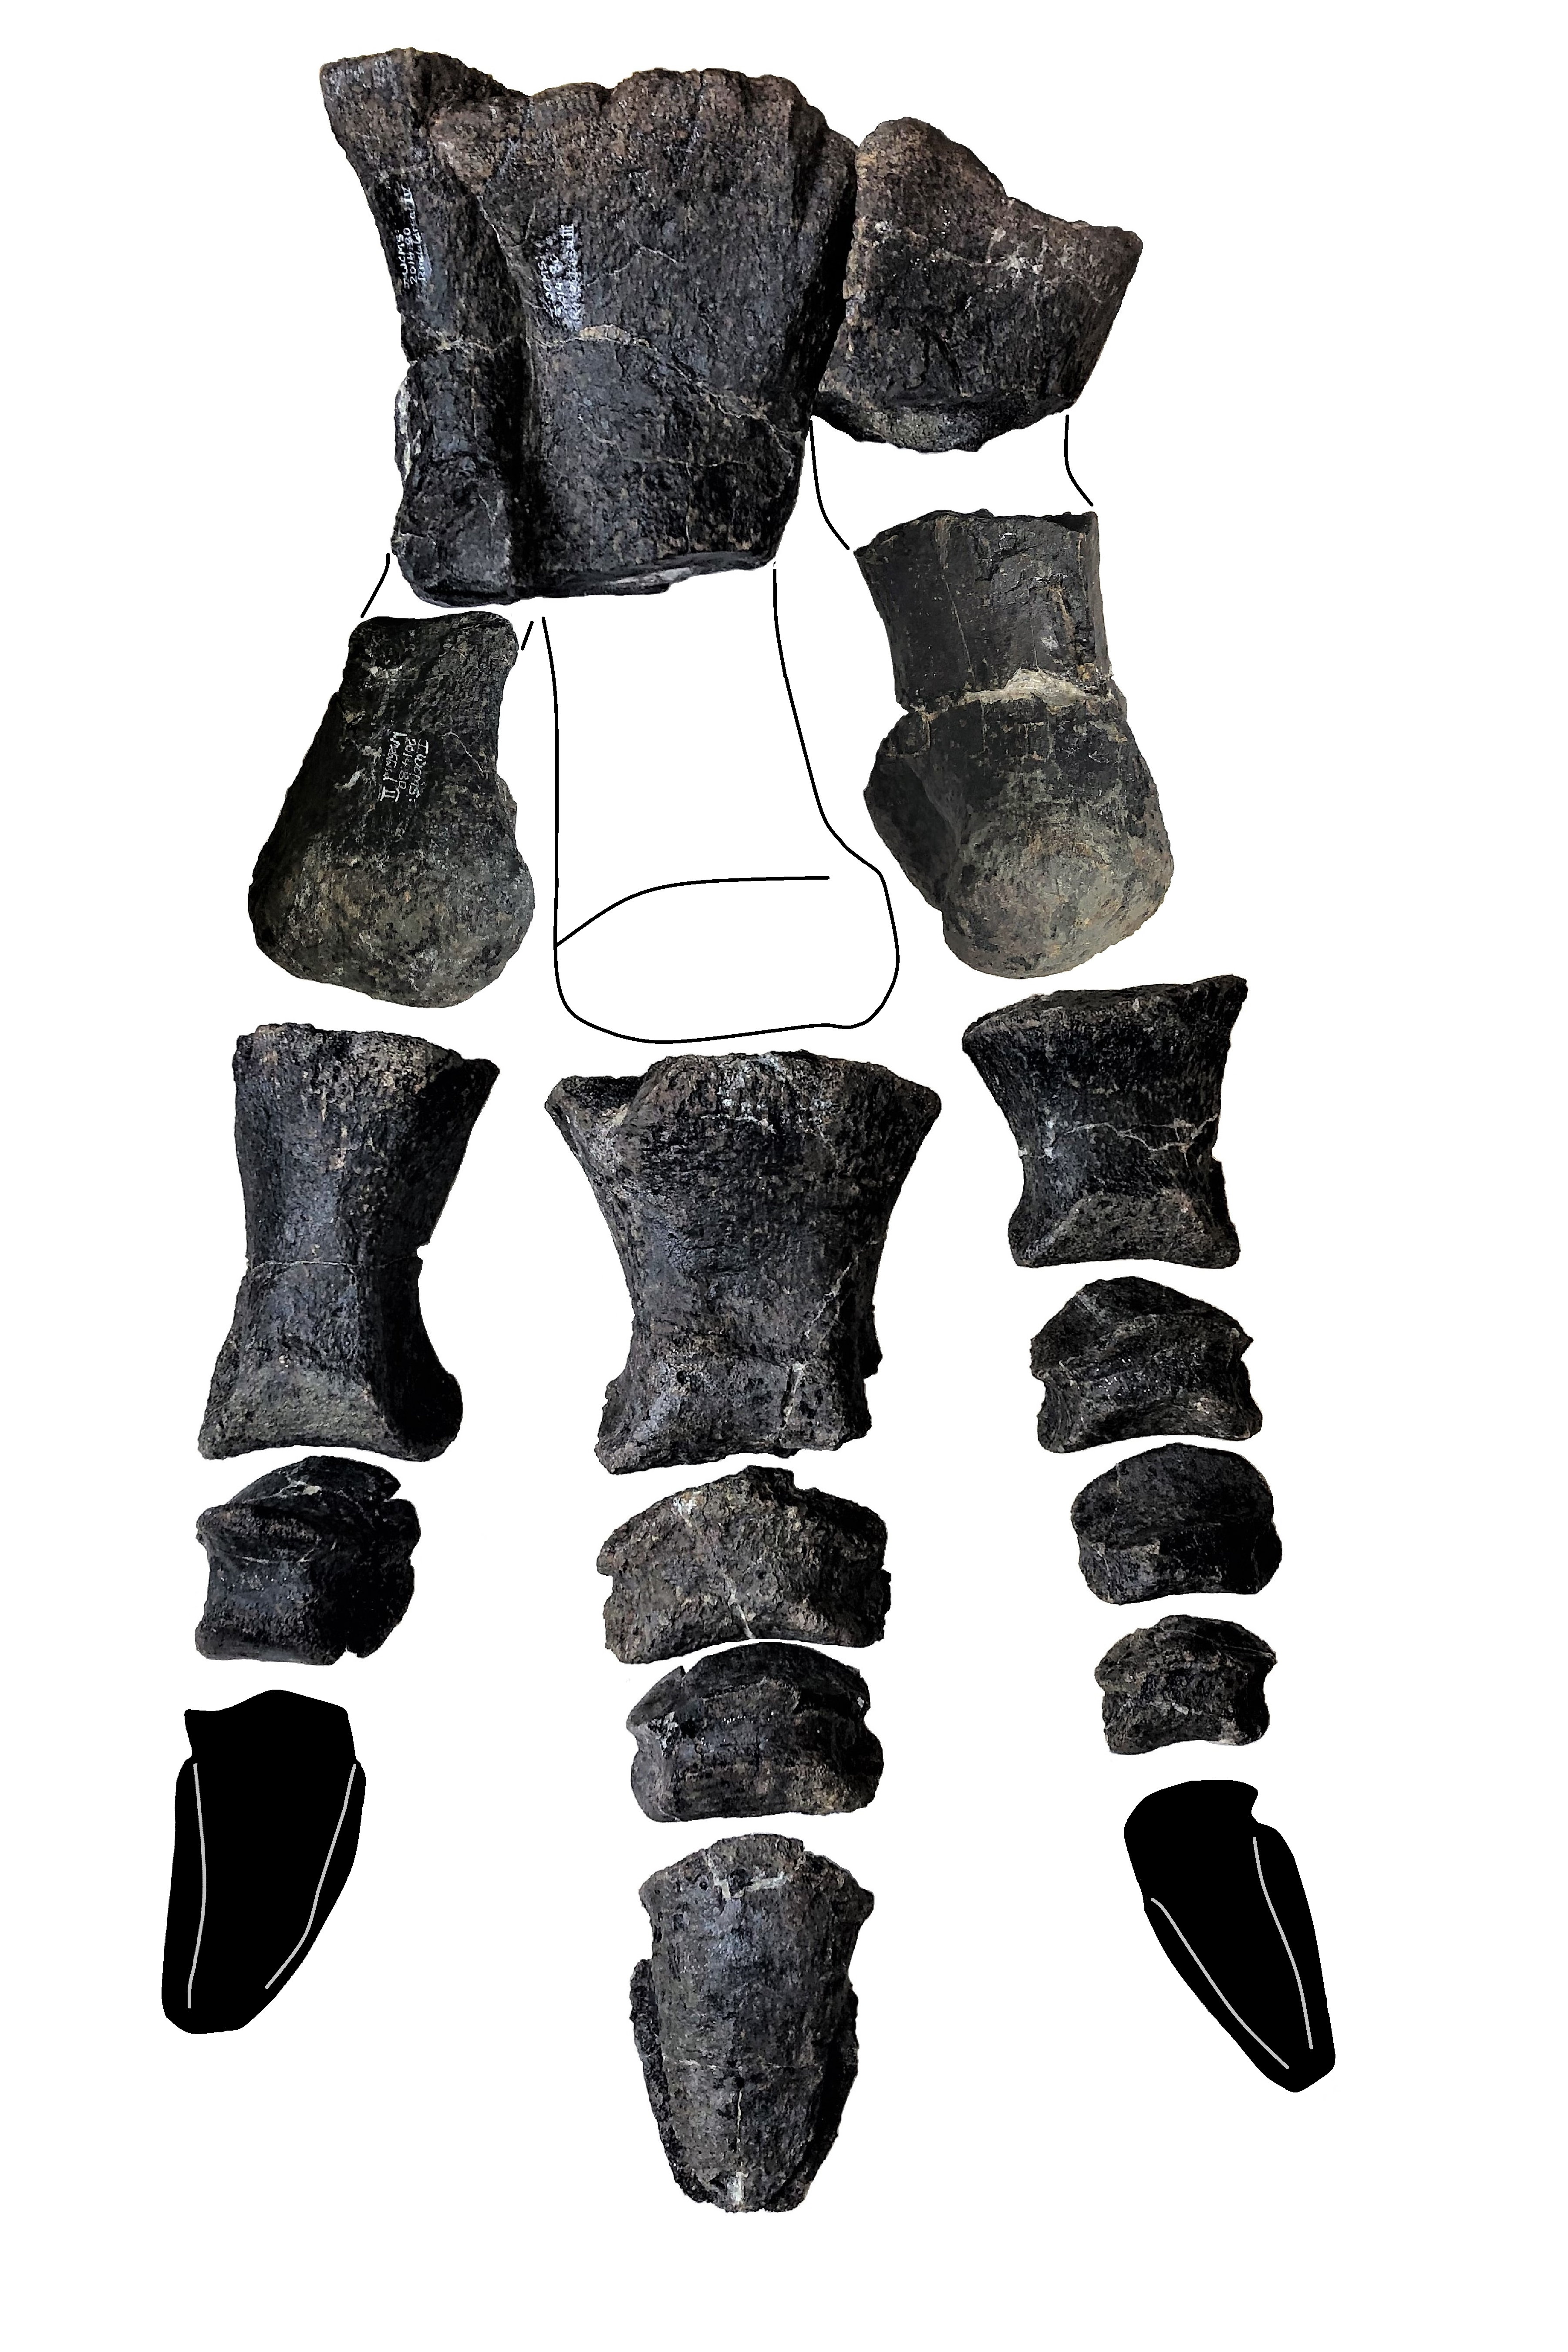 The foot bones of Comptonatus chasei 